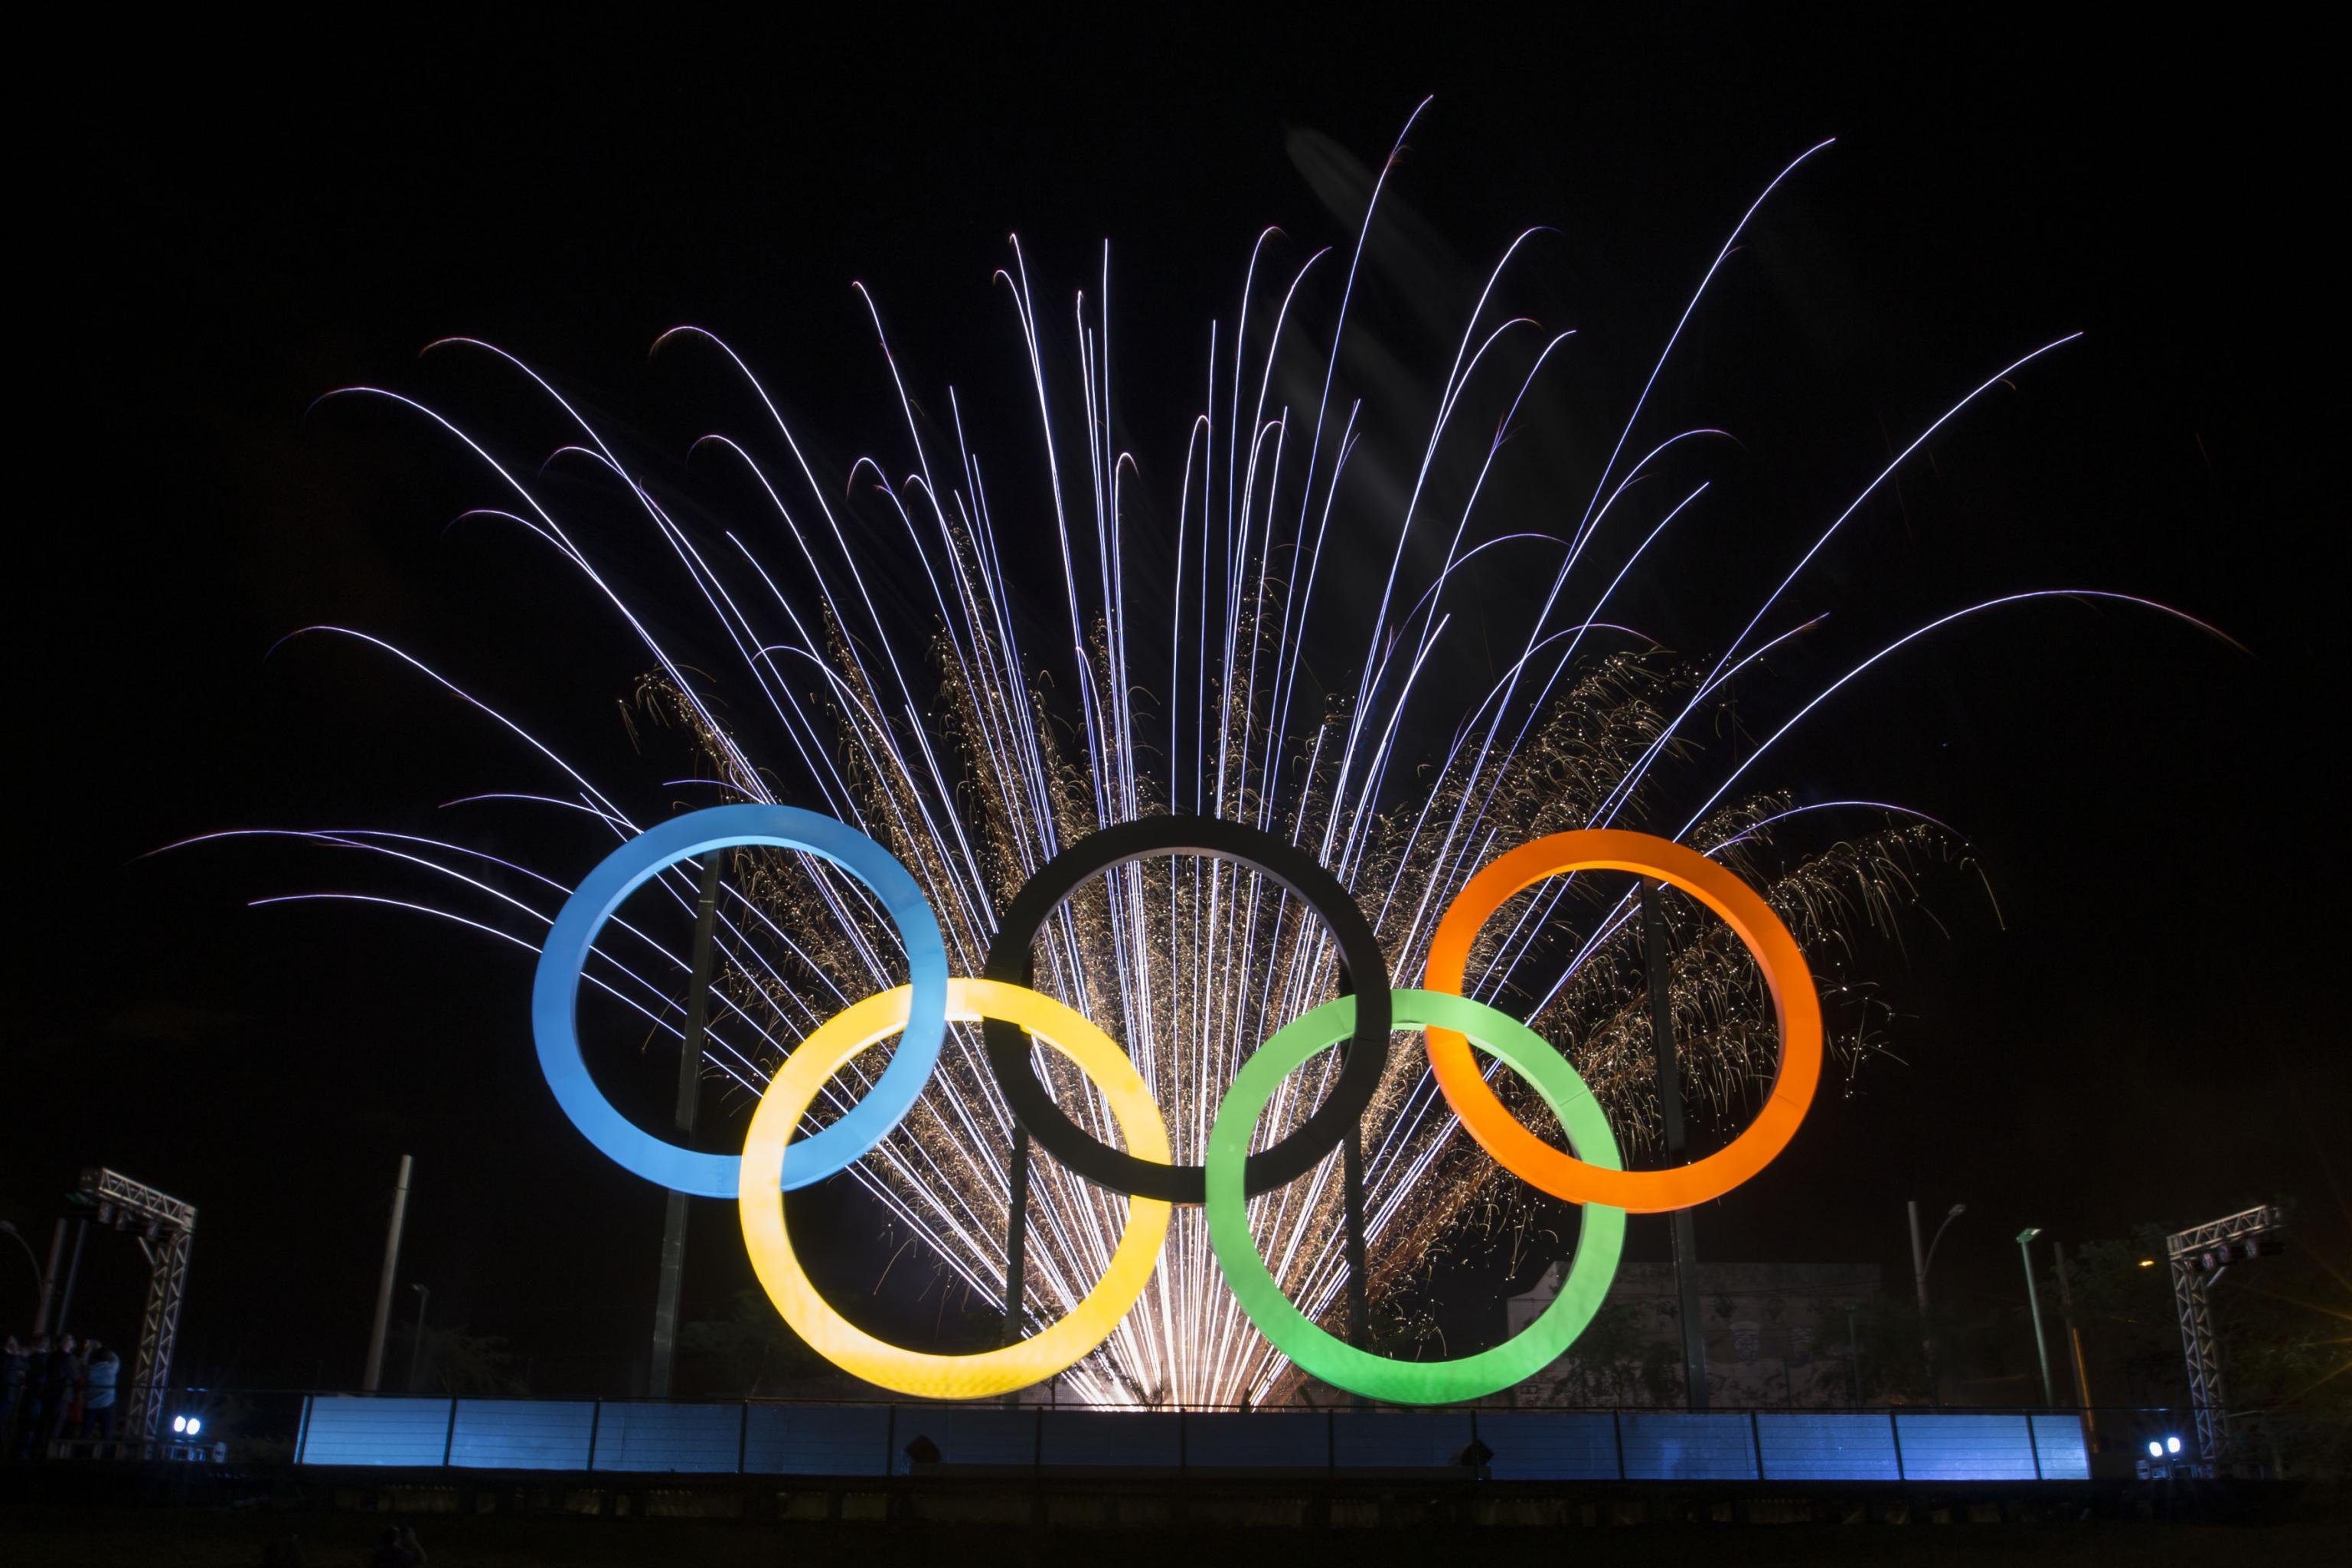 UK Gov back eGames, the 'Olympics for esports